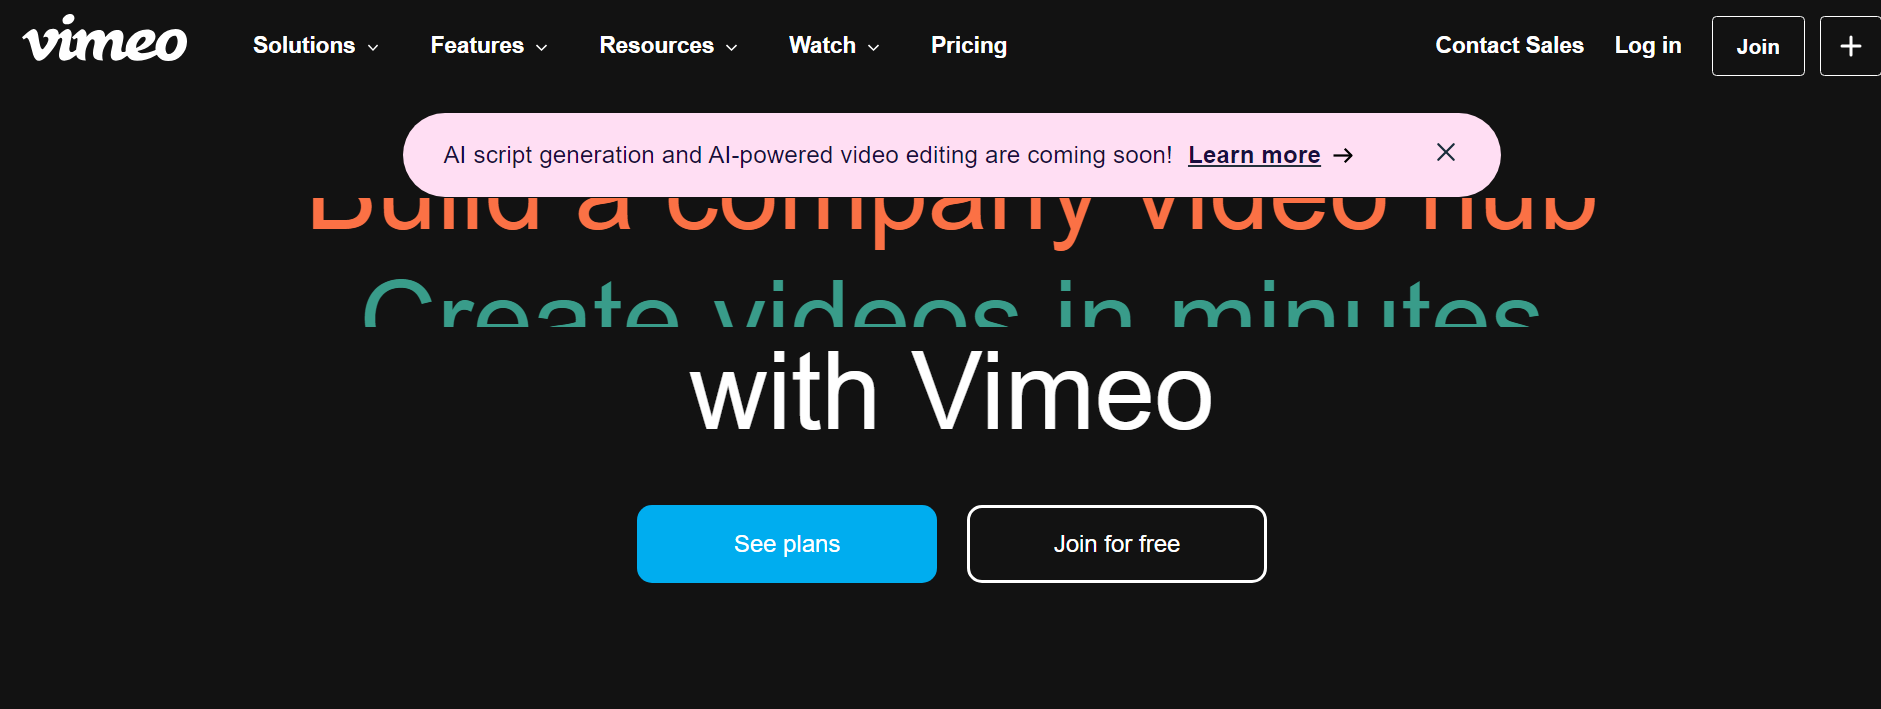 Vimeo video sharing website